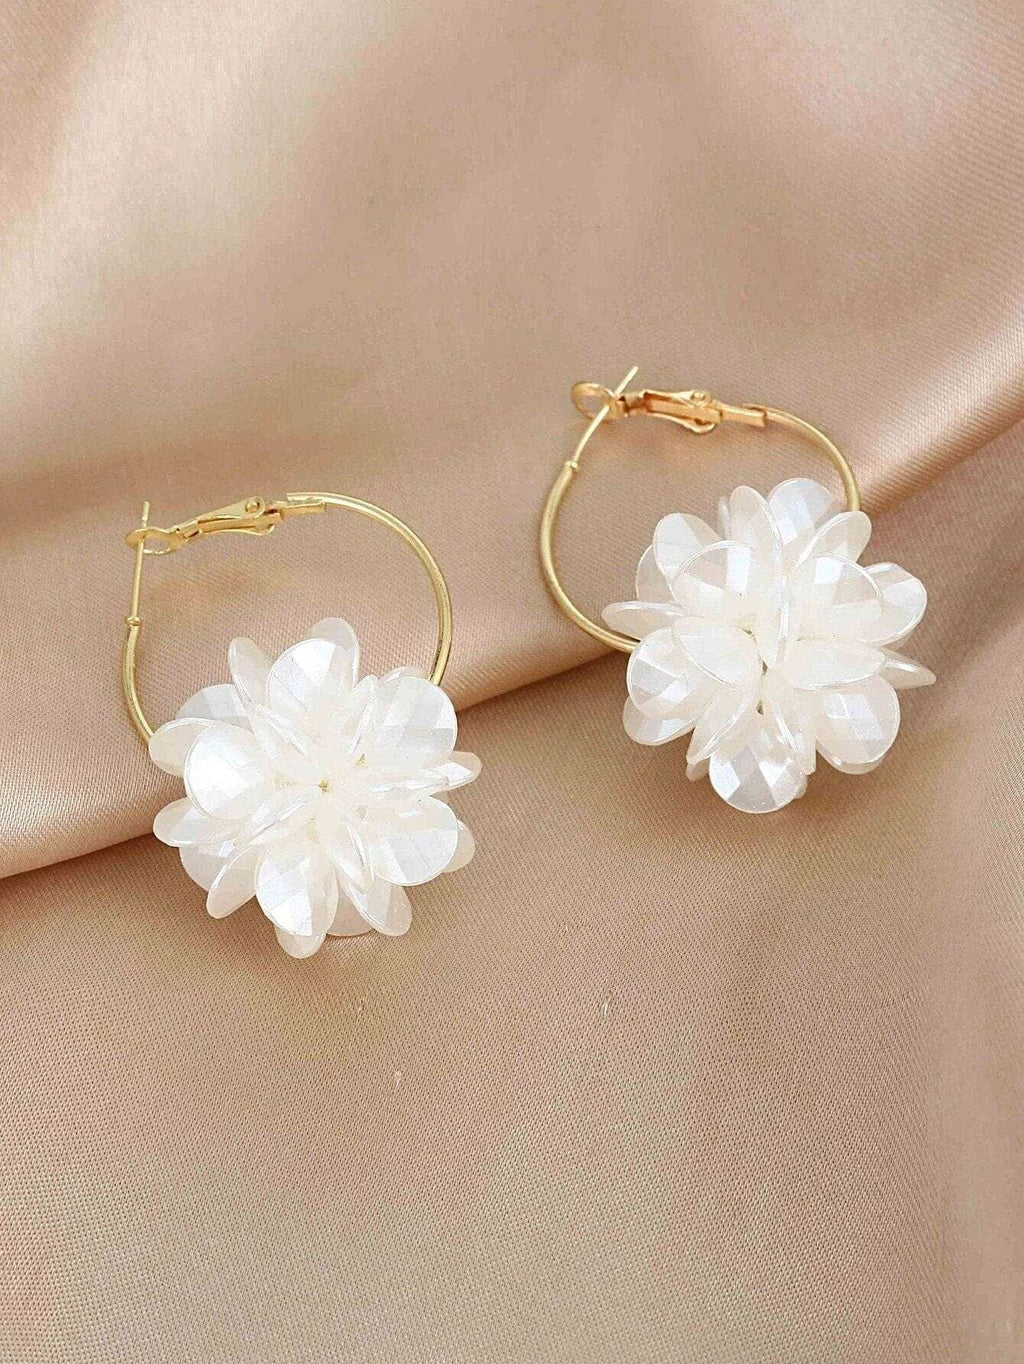 Bridal Abalone Pearl Flower Hoop Earrings, Wedding Bridesmaid Latch Omega Back Hooped Earrings, Bride Fashion Hooped Floral Studs - KaleaBoutique.com